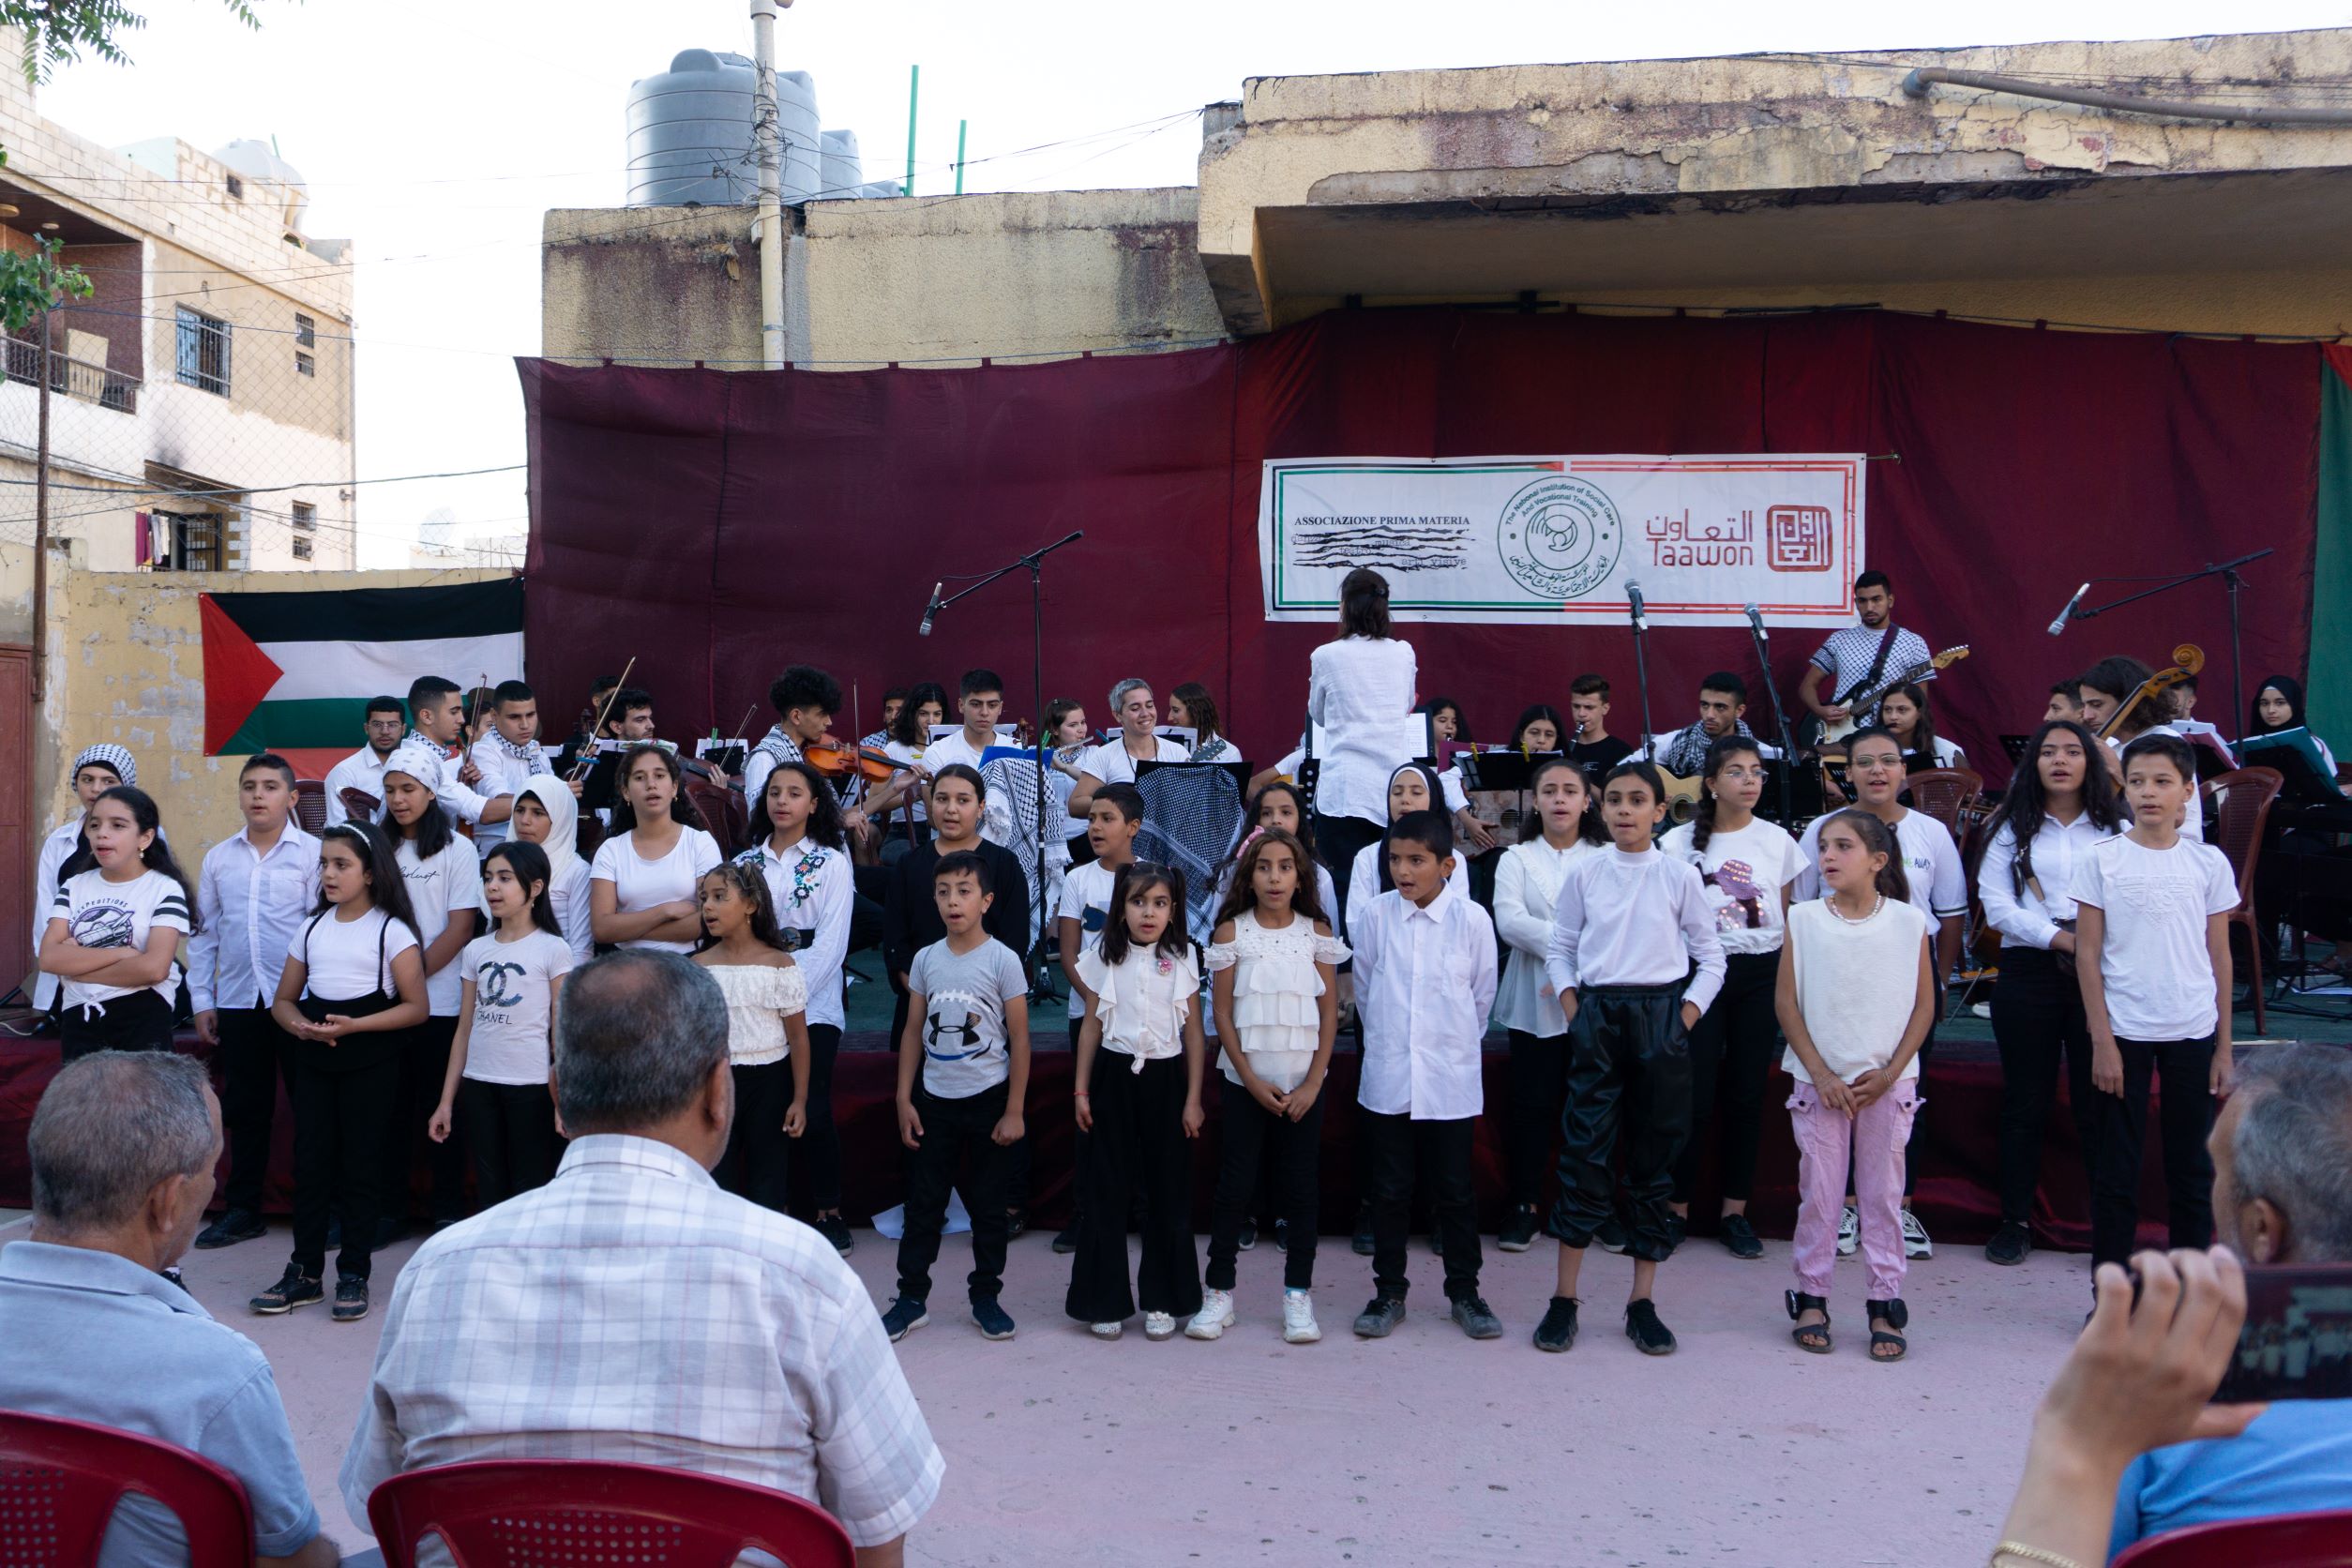 Final Concert, Eljalil camp, Baalbek, 13th August 2022